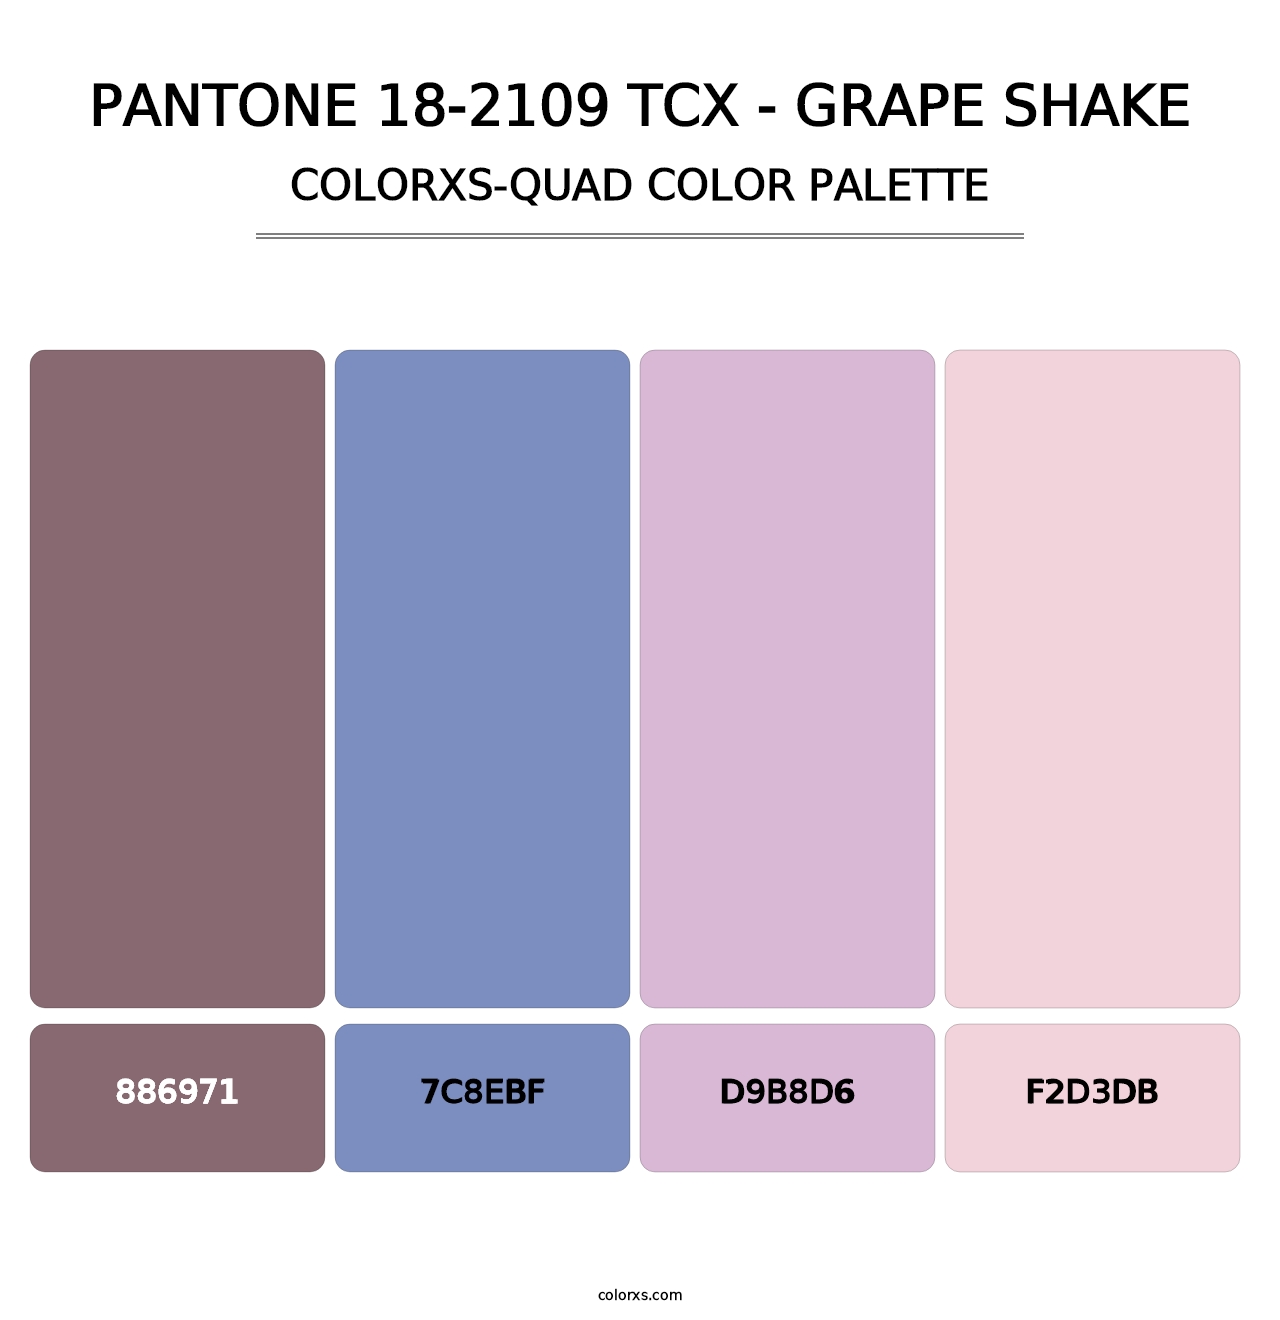 PANTONE 18-2109 TCX - Grape Shake - Colorxs Quad Palette